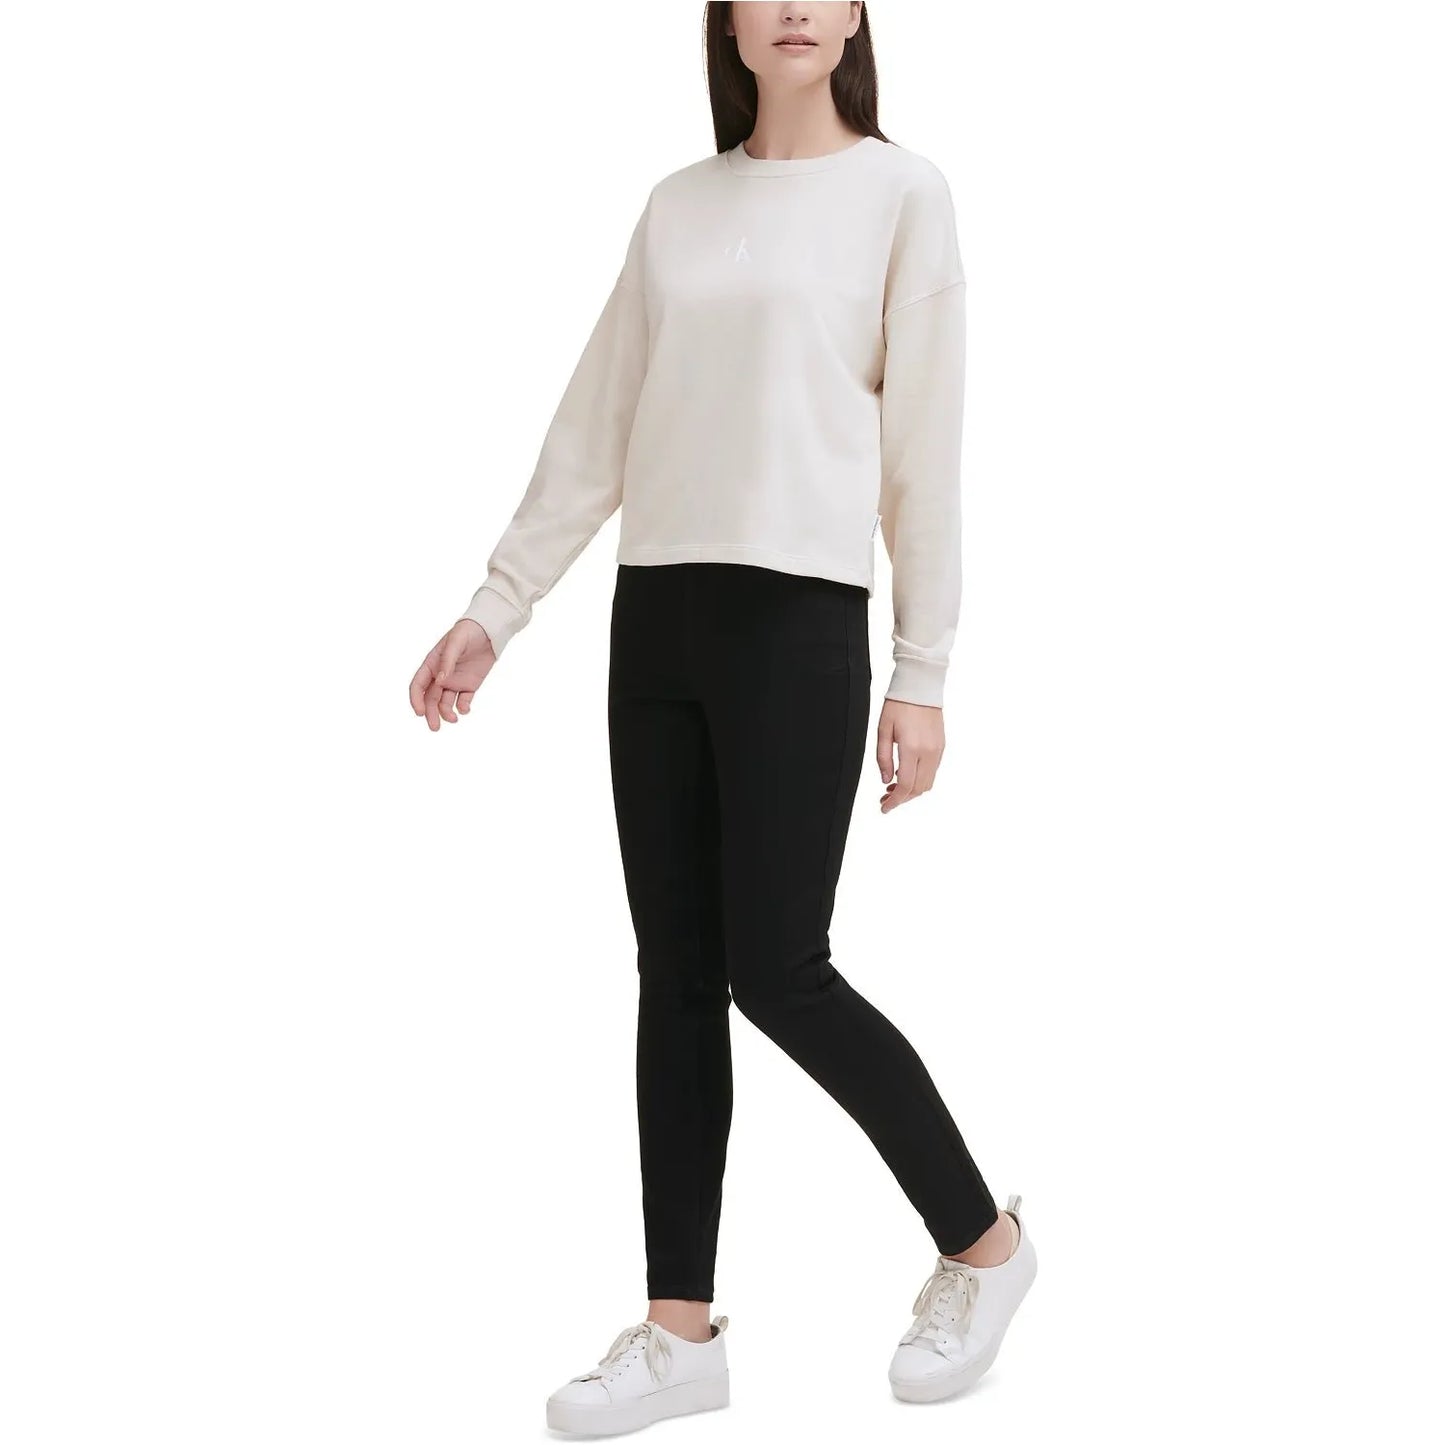 Calvin Klein-Calvin Klein Jeans Logo Pullover Sweatshirt, Tan/Beige, Size: XL - Brandat Outlet